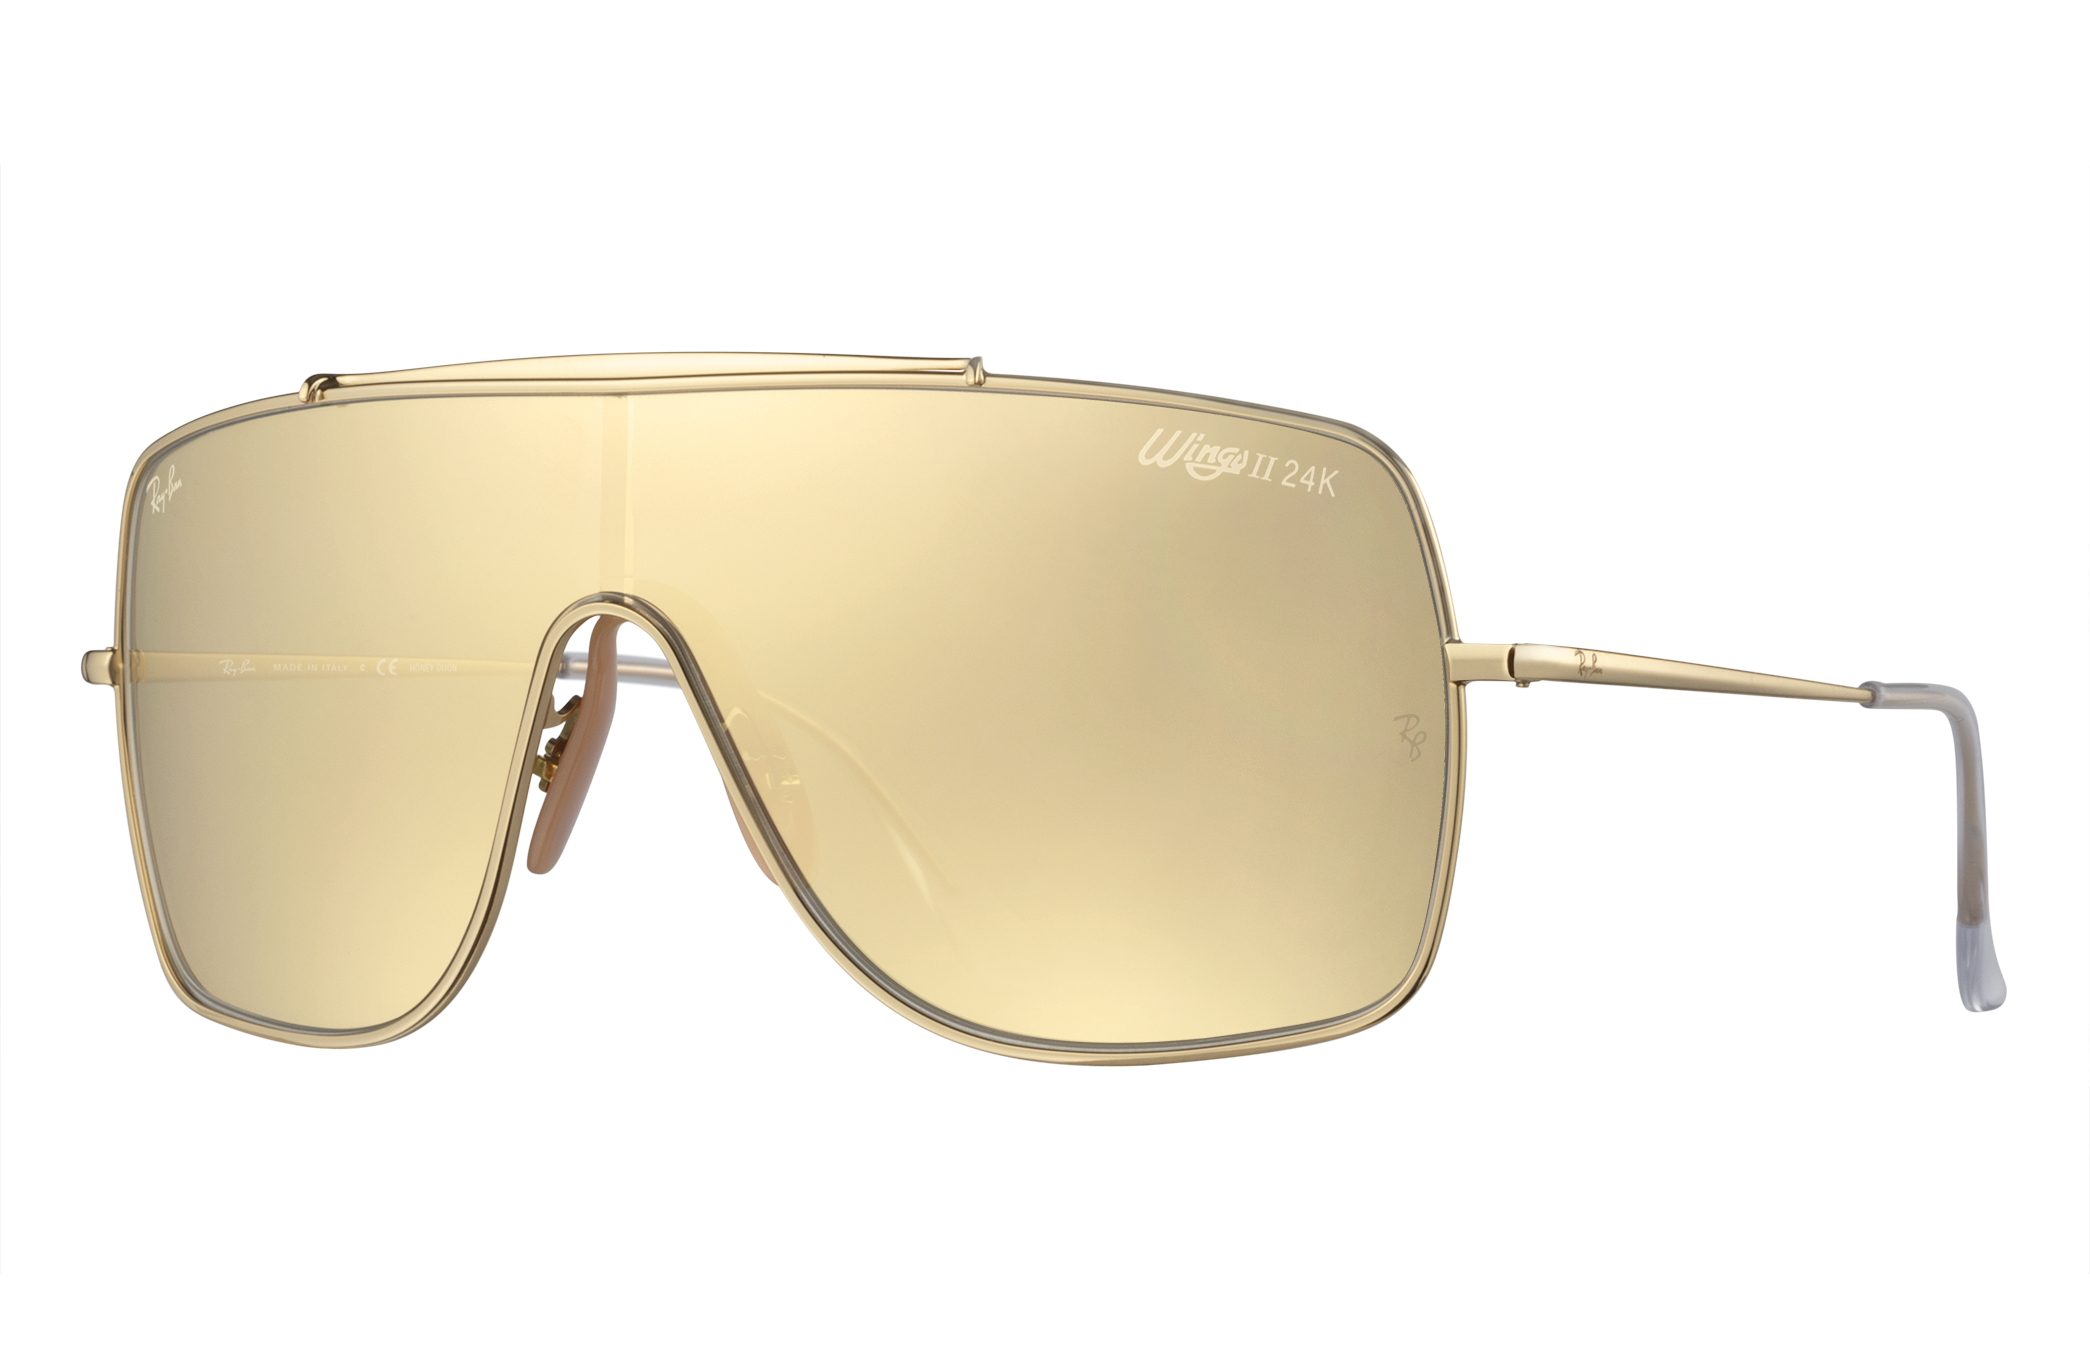 Wings Ii Hd80 Sunglasses in Dourado and Dourado | Ray-Ban®